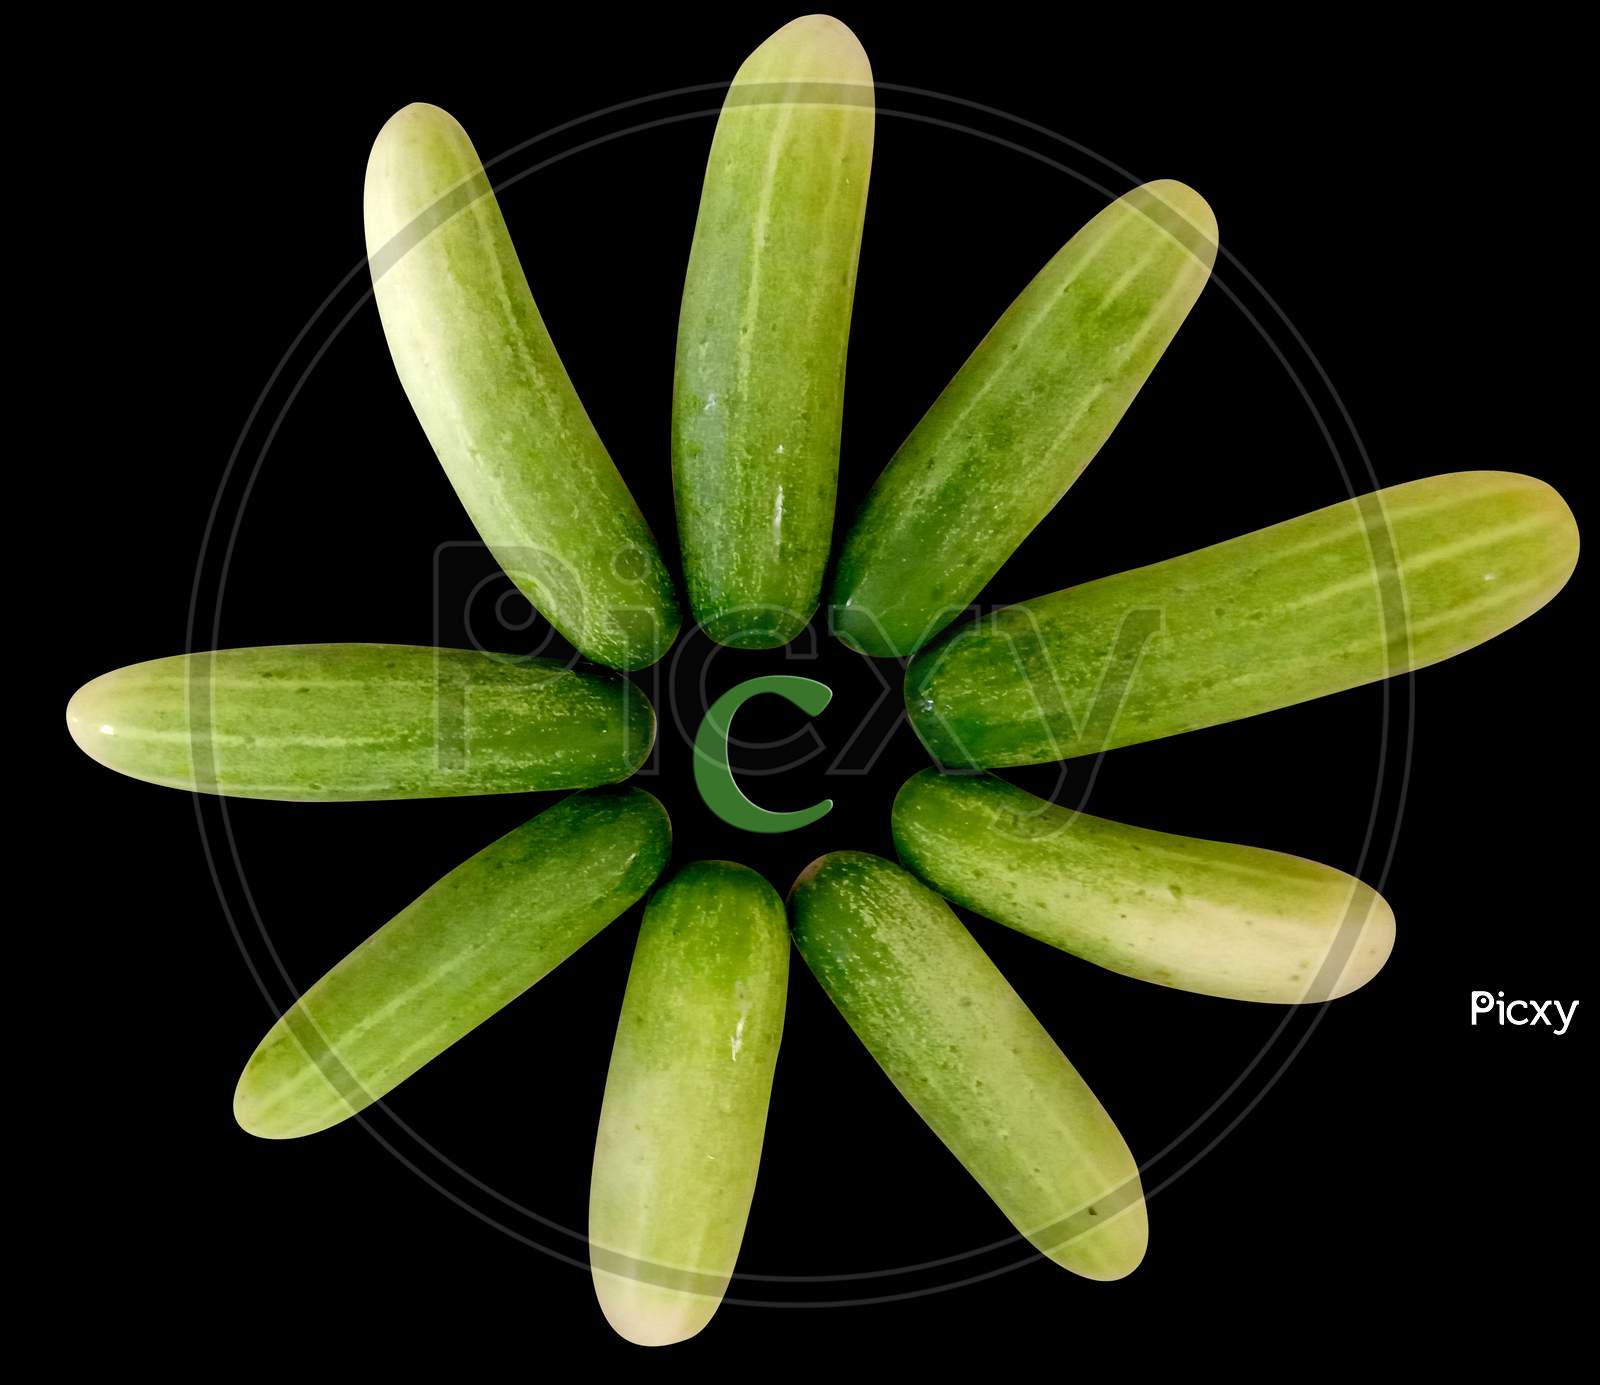 Whole Cucumber Arranged In A Flower Shape